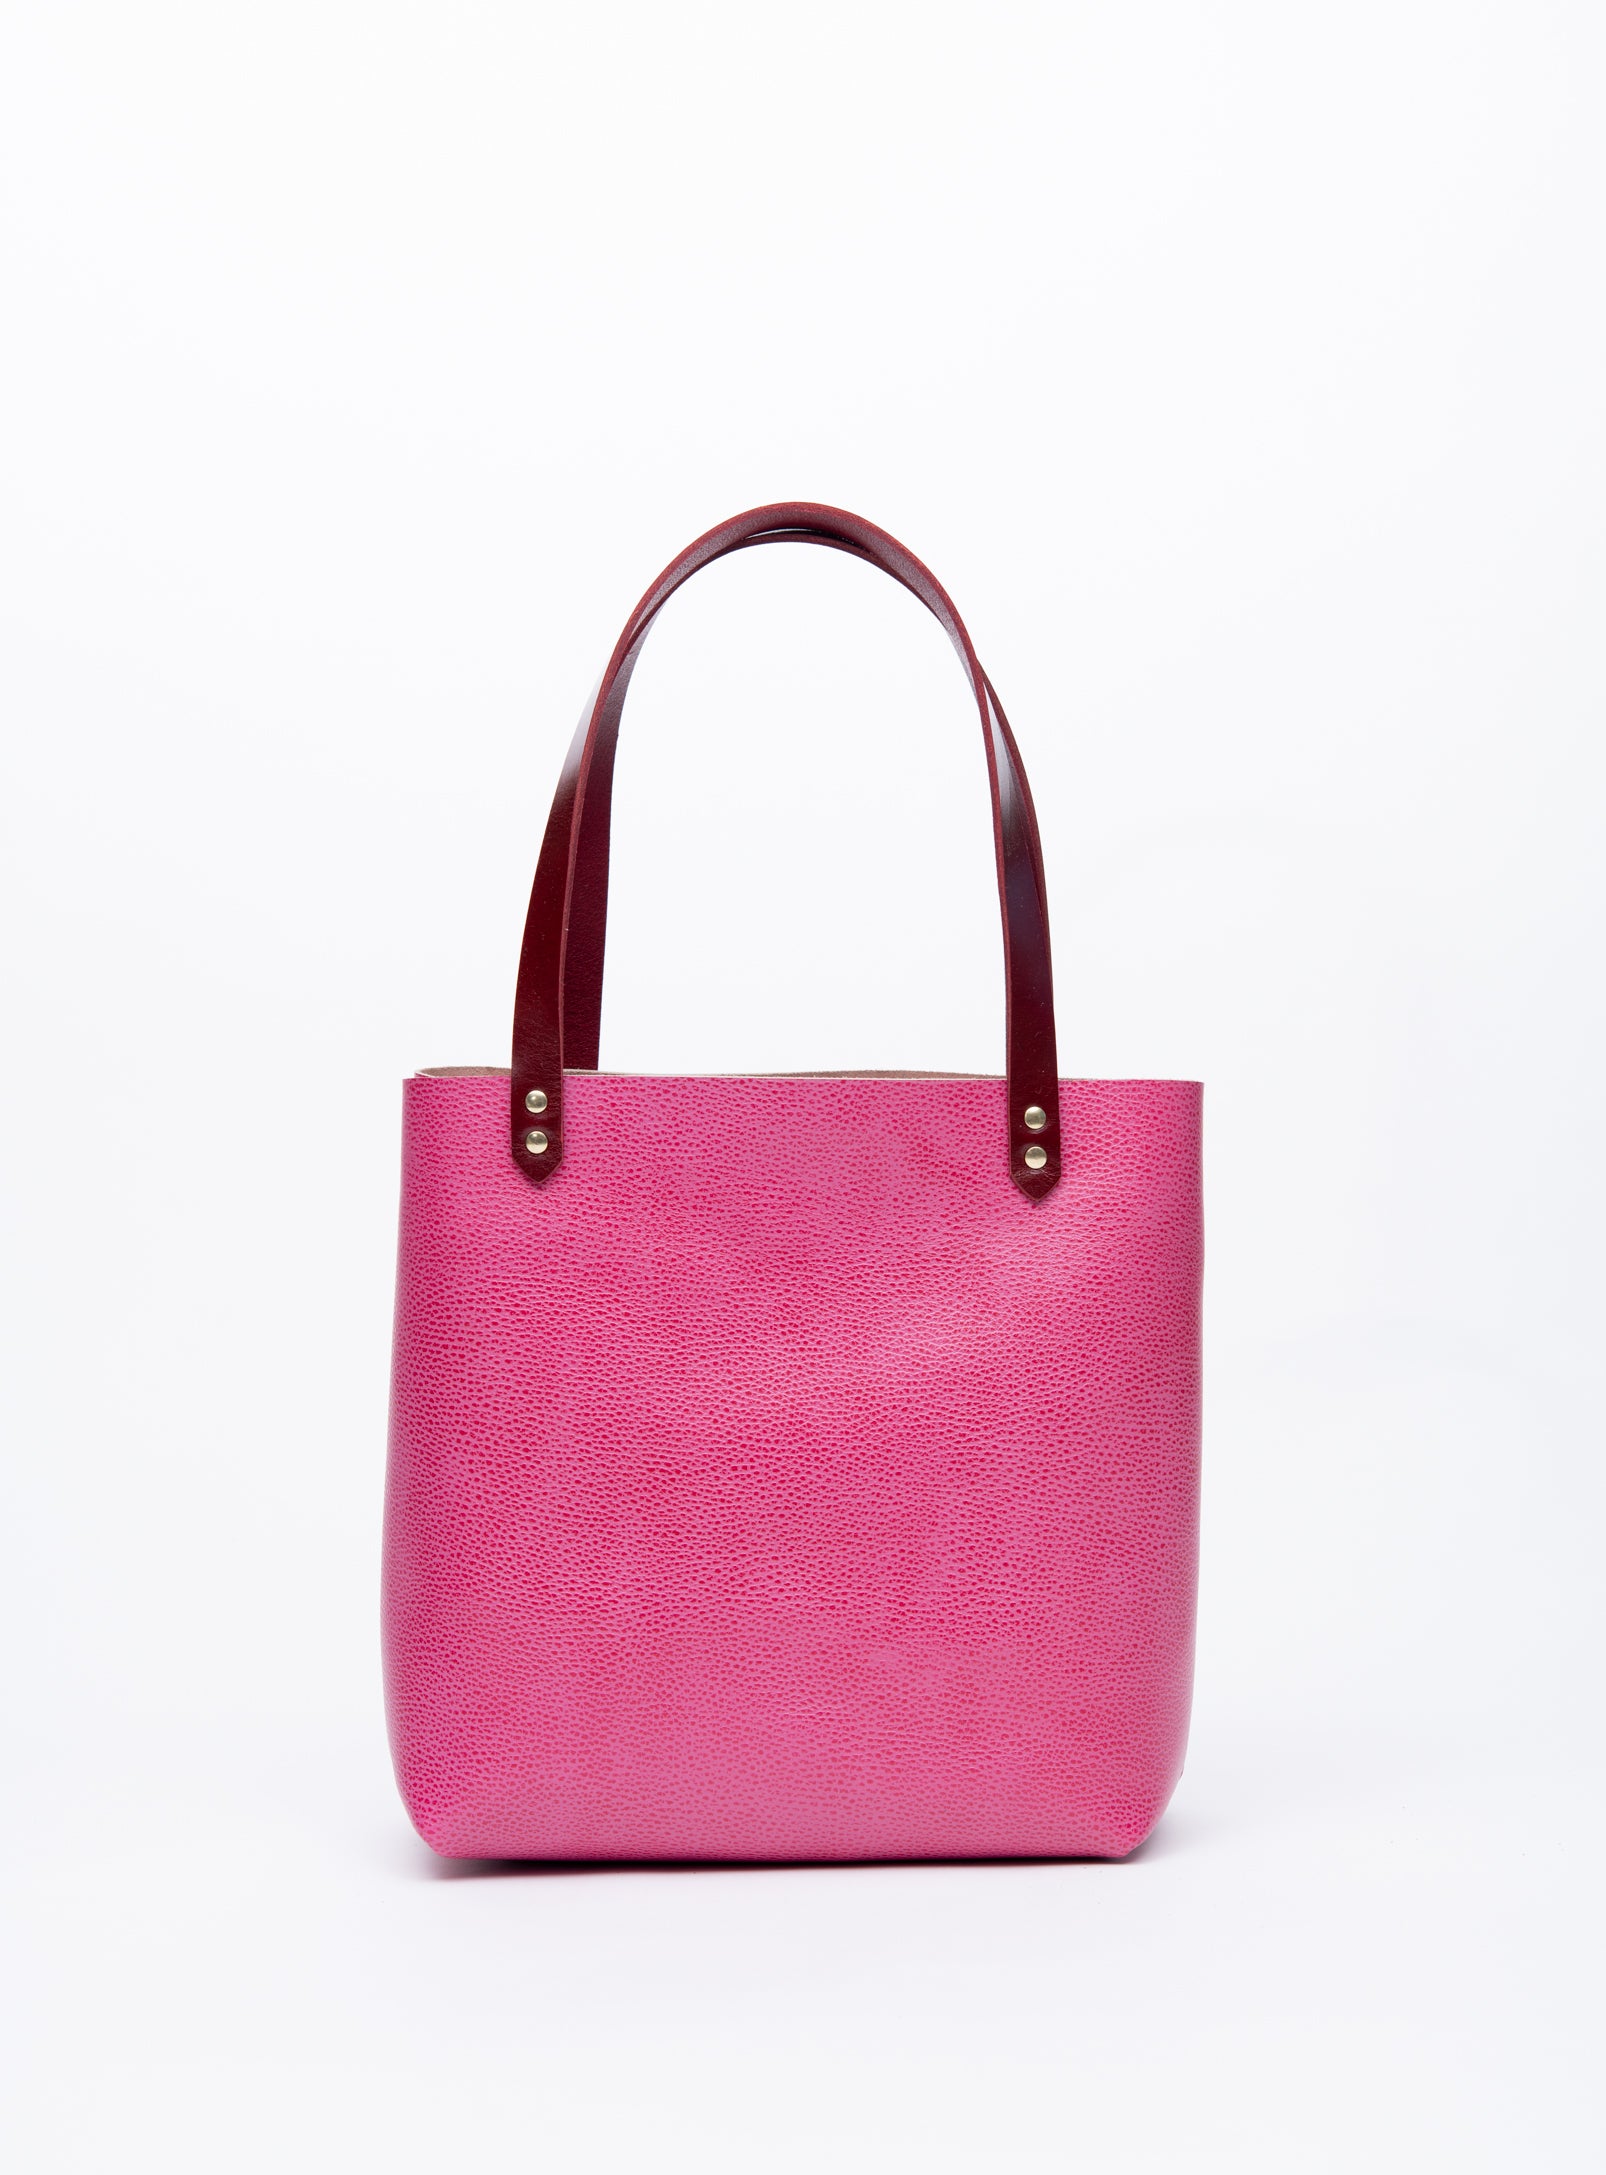 Leather minimalist tote bag FLORENCE model